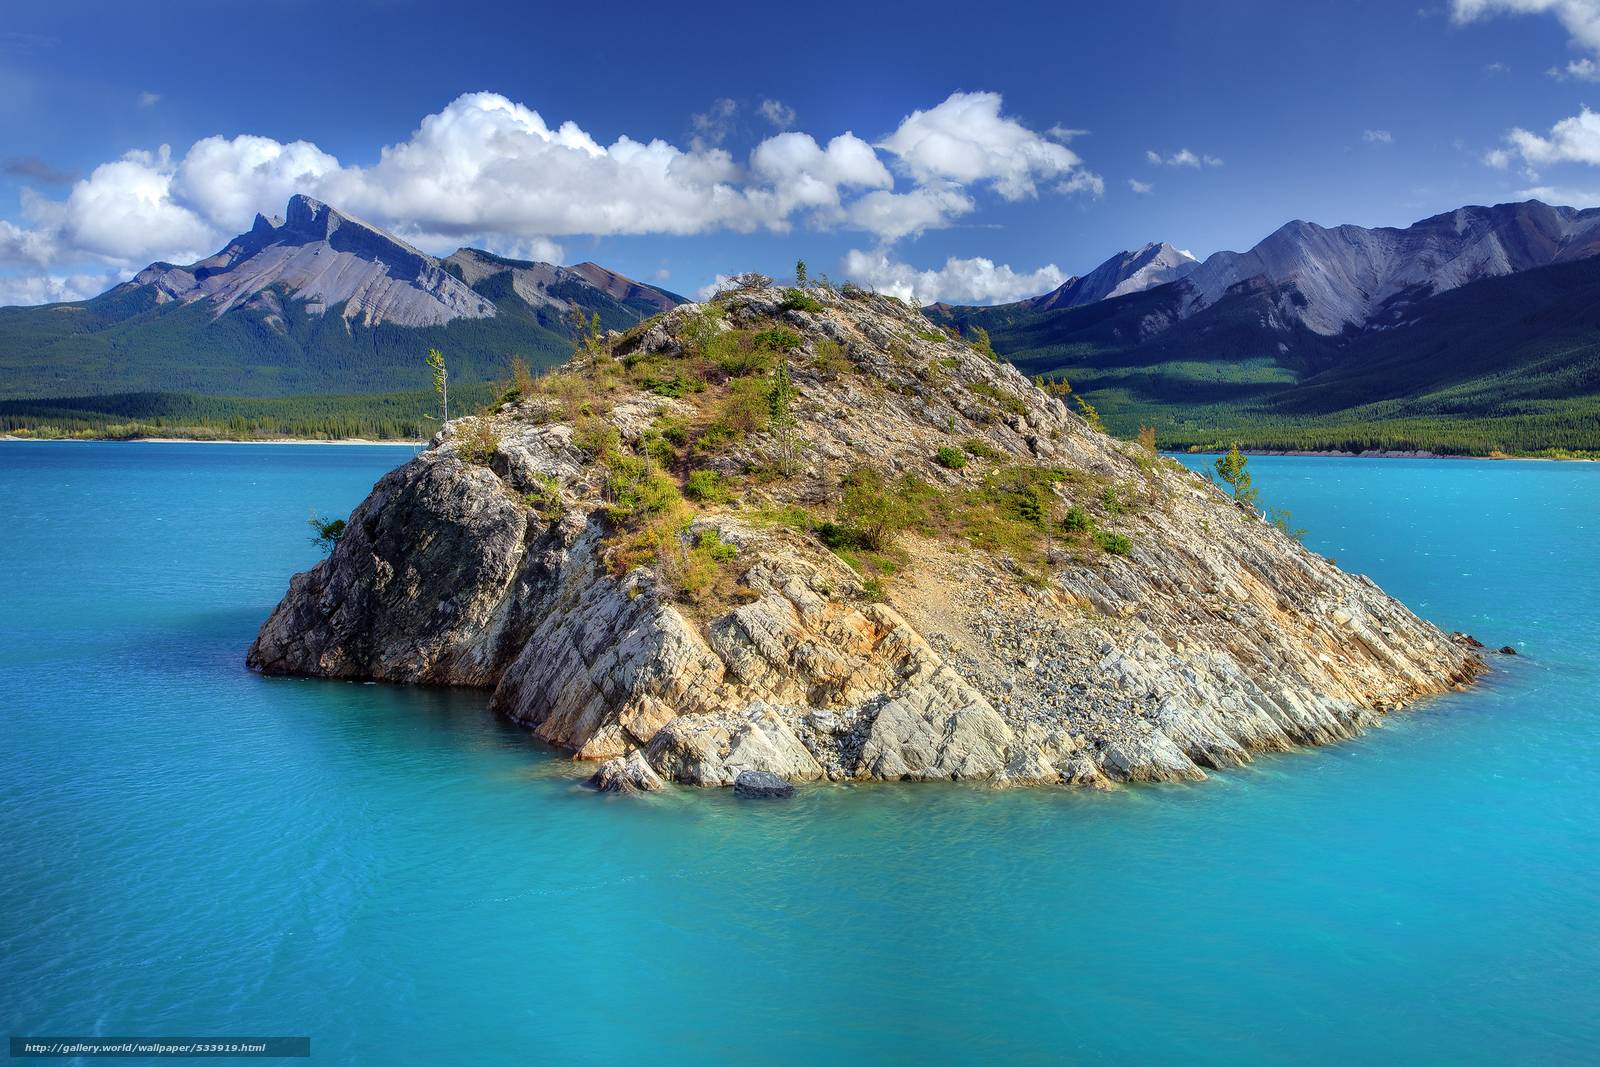 Download wallpaper island of blue lake, banff national